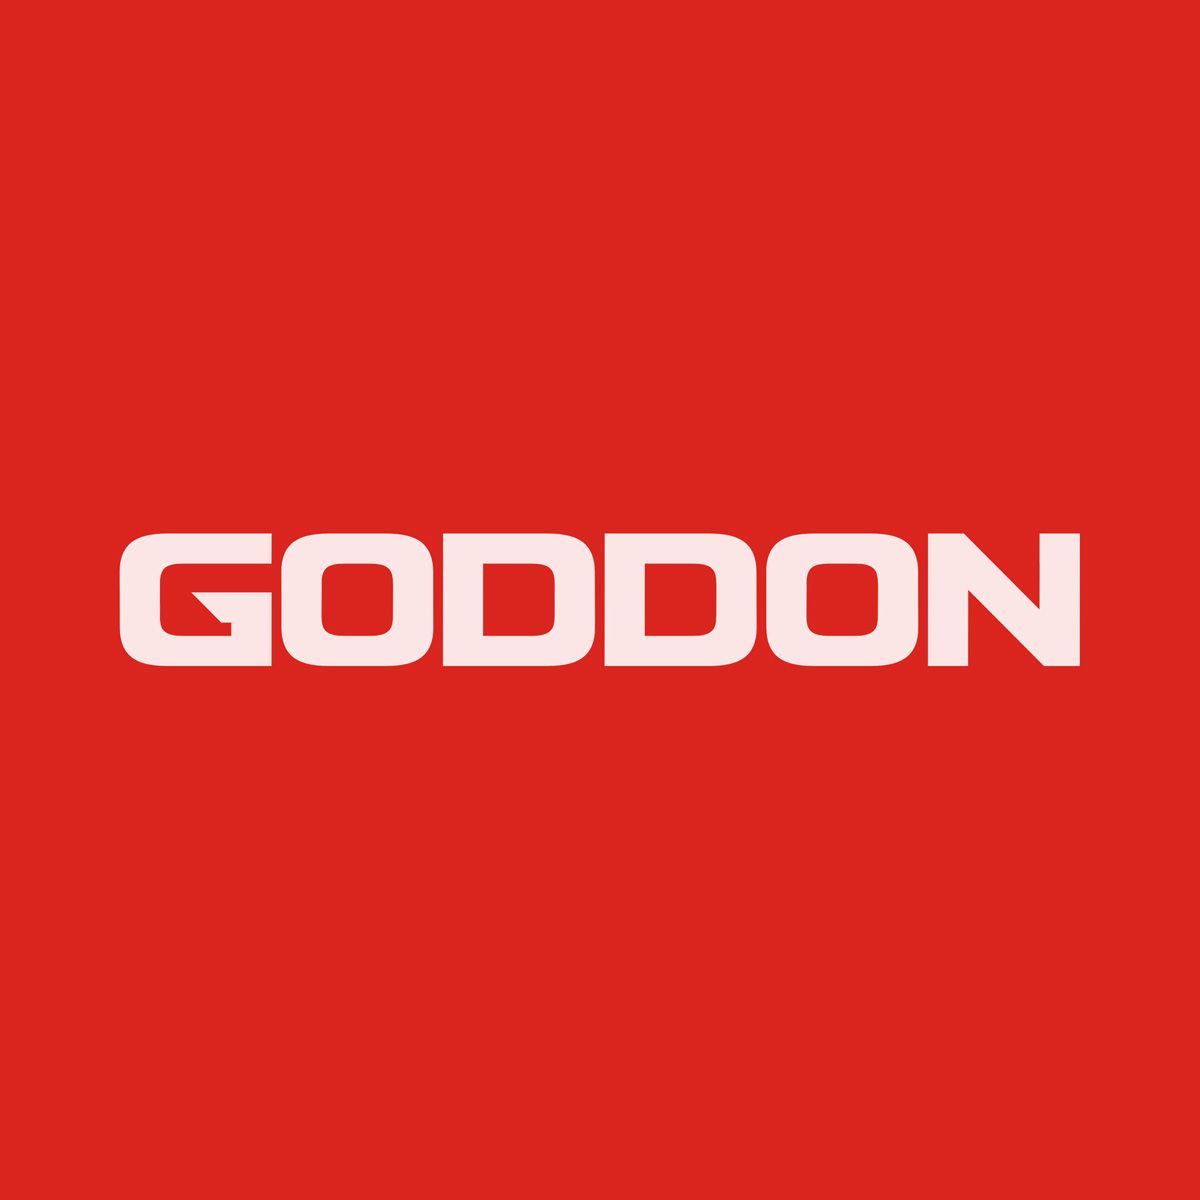 Yiwu Goddon Vision Technology Co., Ltd. logo